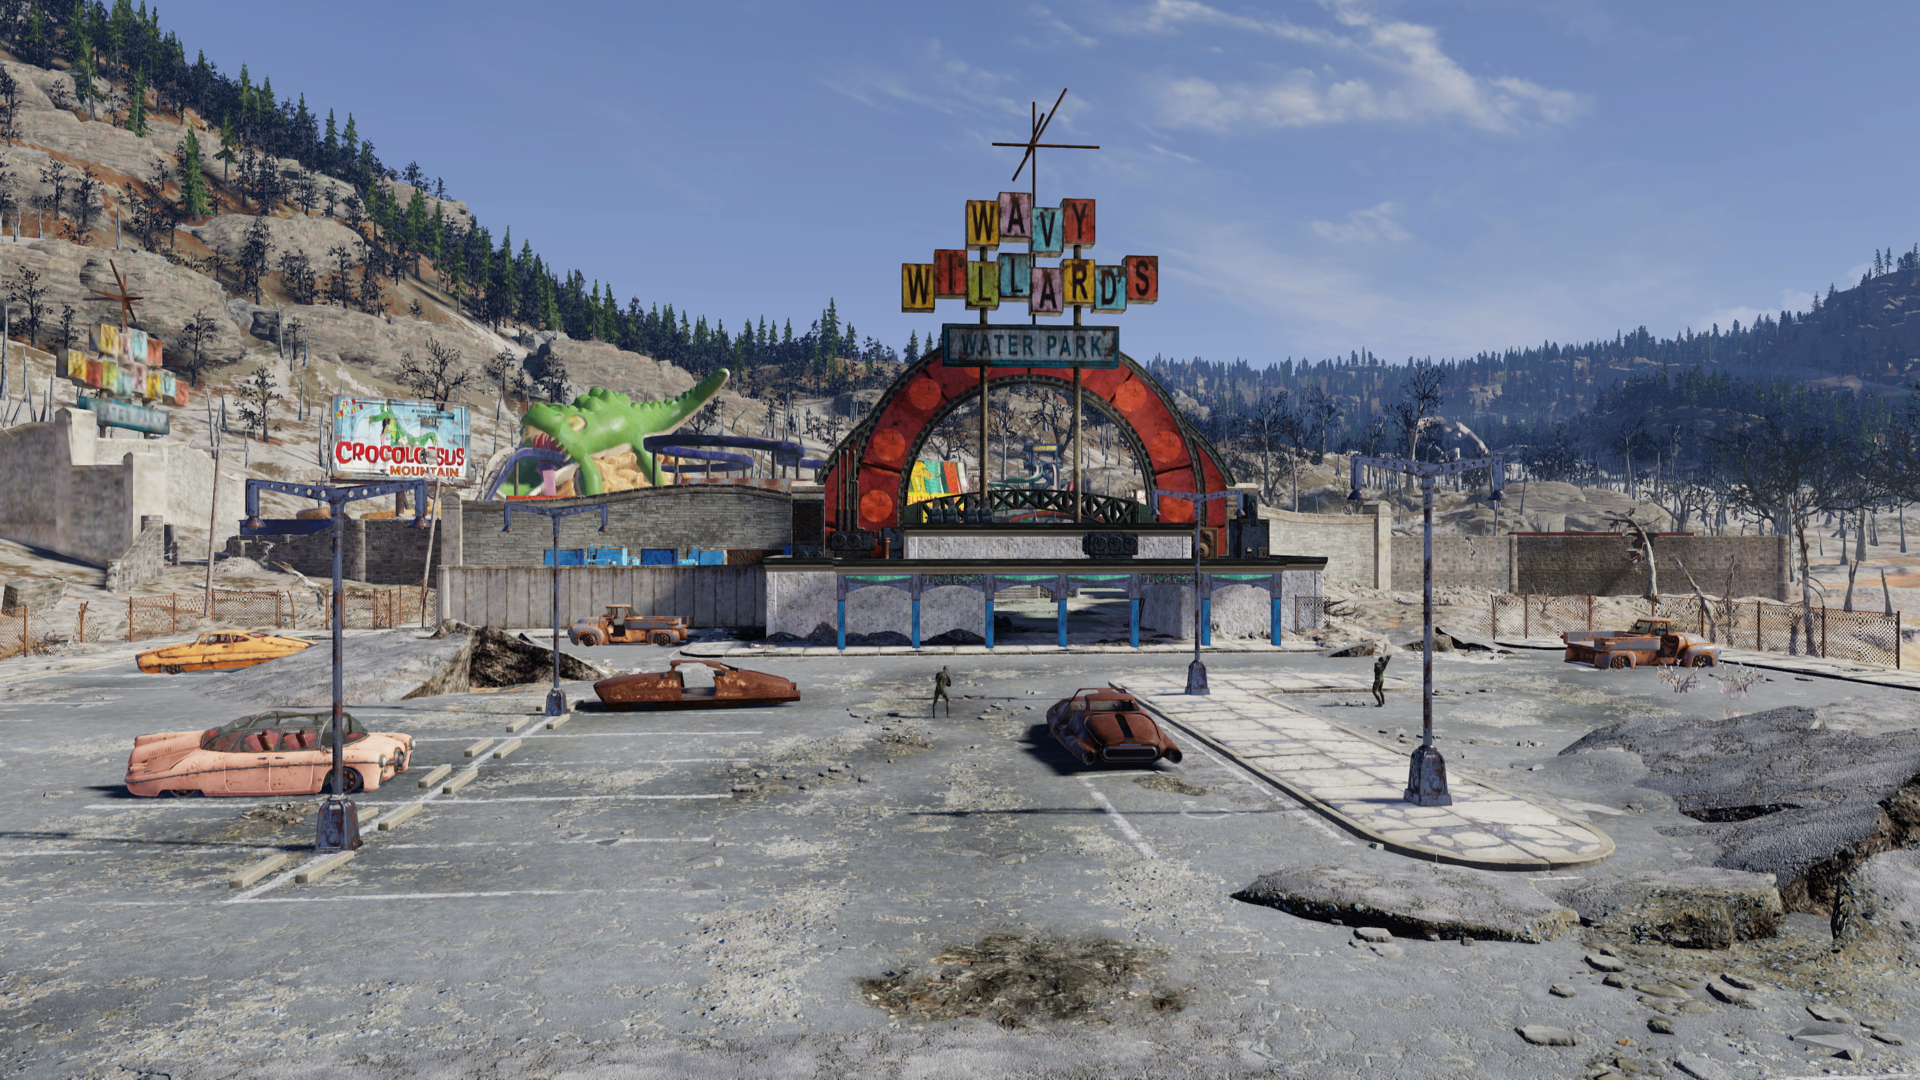 Fallout 76 Wavy Willard's Water Park Toxic Valley